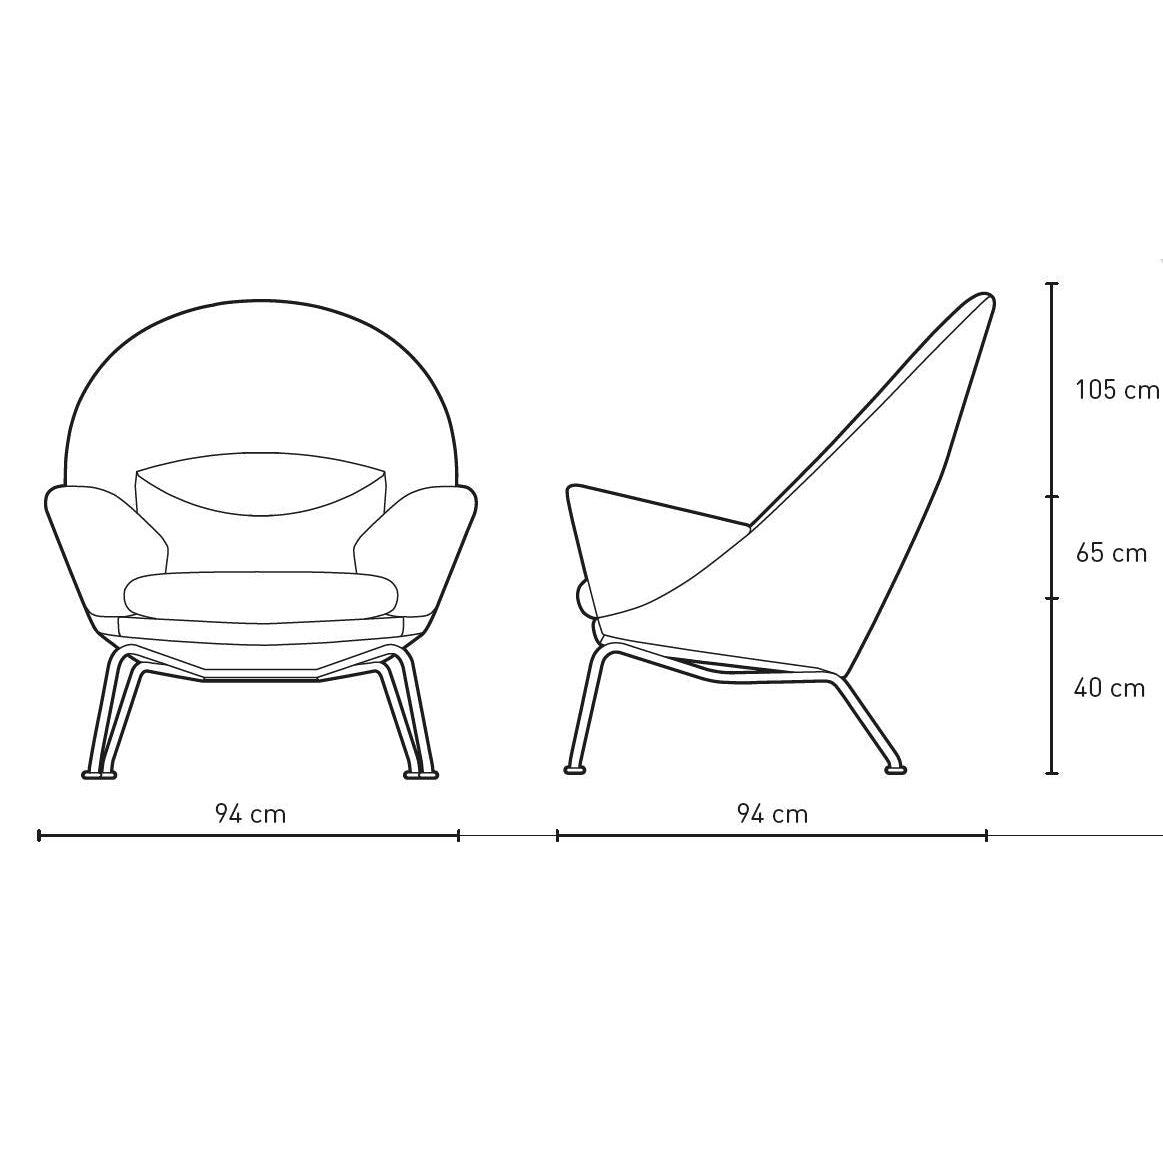 Carl Hansen CH468 Oculus stol, stål/ljusgrå tyg